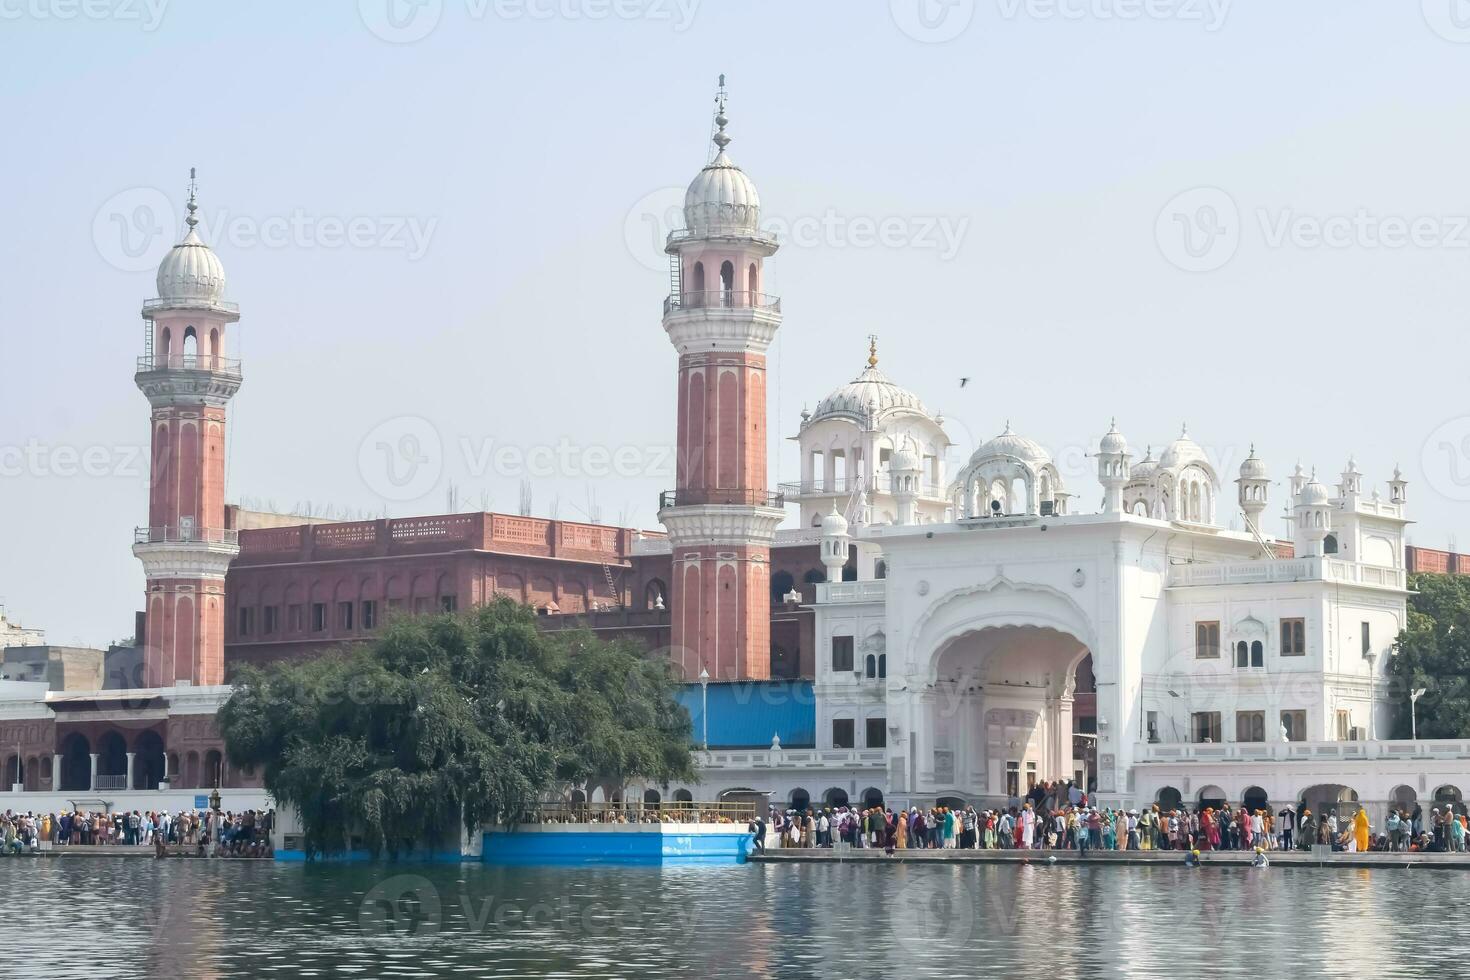 visie van details van architectuur binnen gouden tempel Harmandir sahib in amritsar, punjab, Indië, beroemd Indisch Sikh mijlpaal, gouden tempel, de hoofd heiligdom van sikhs in amritsar, Indië foto